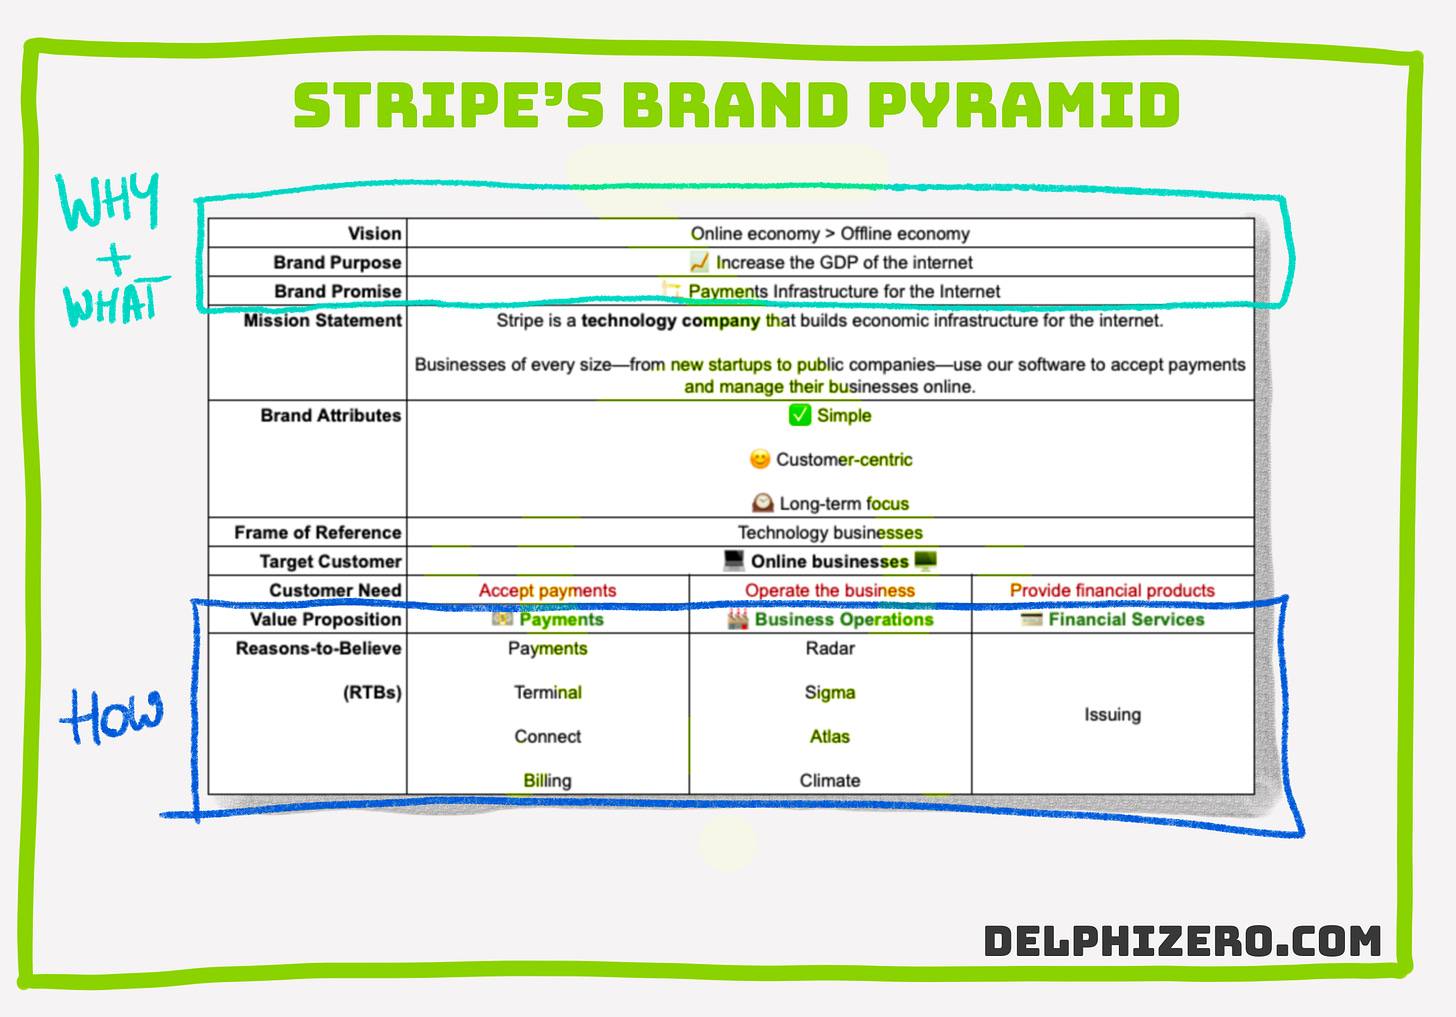 2020: Stripe brand audit with Brand Pyramid framework.